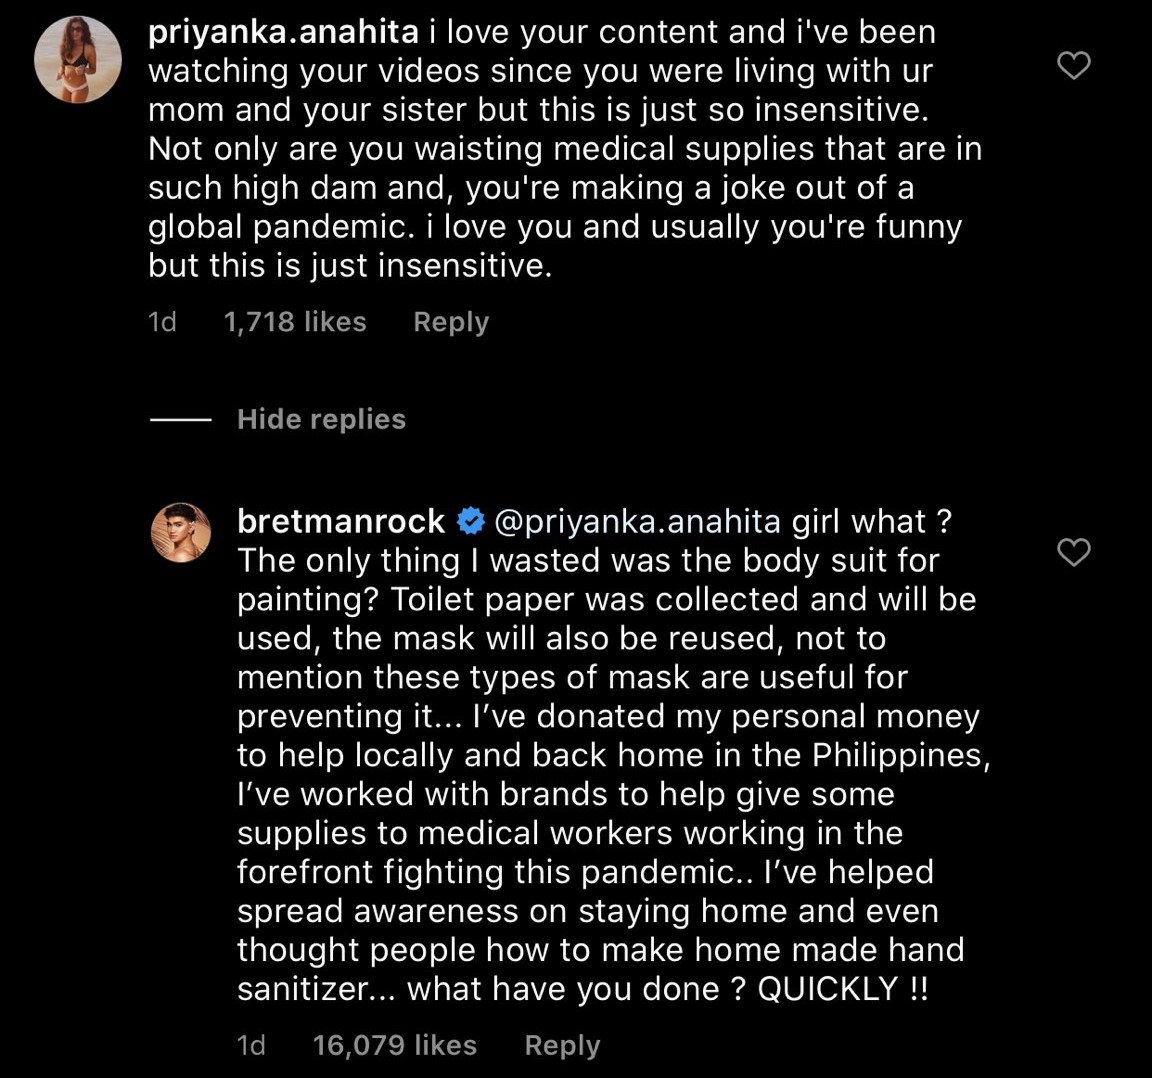 Bretman's reply to Priyanka